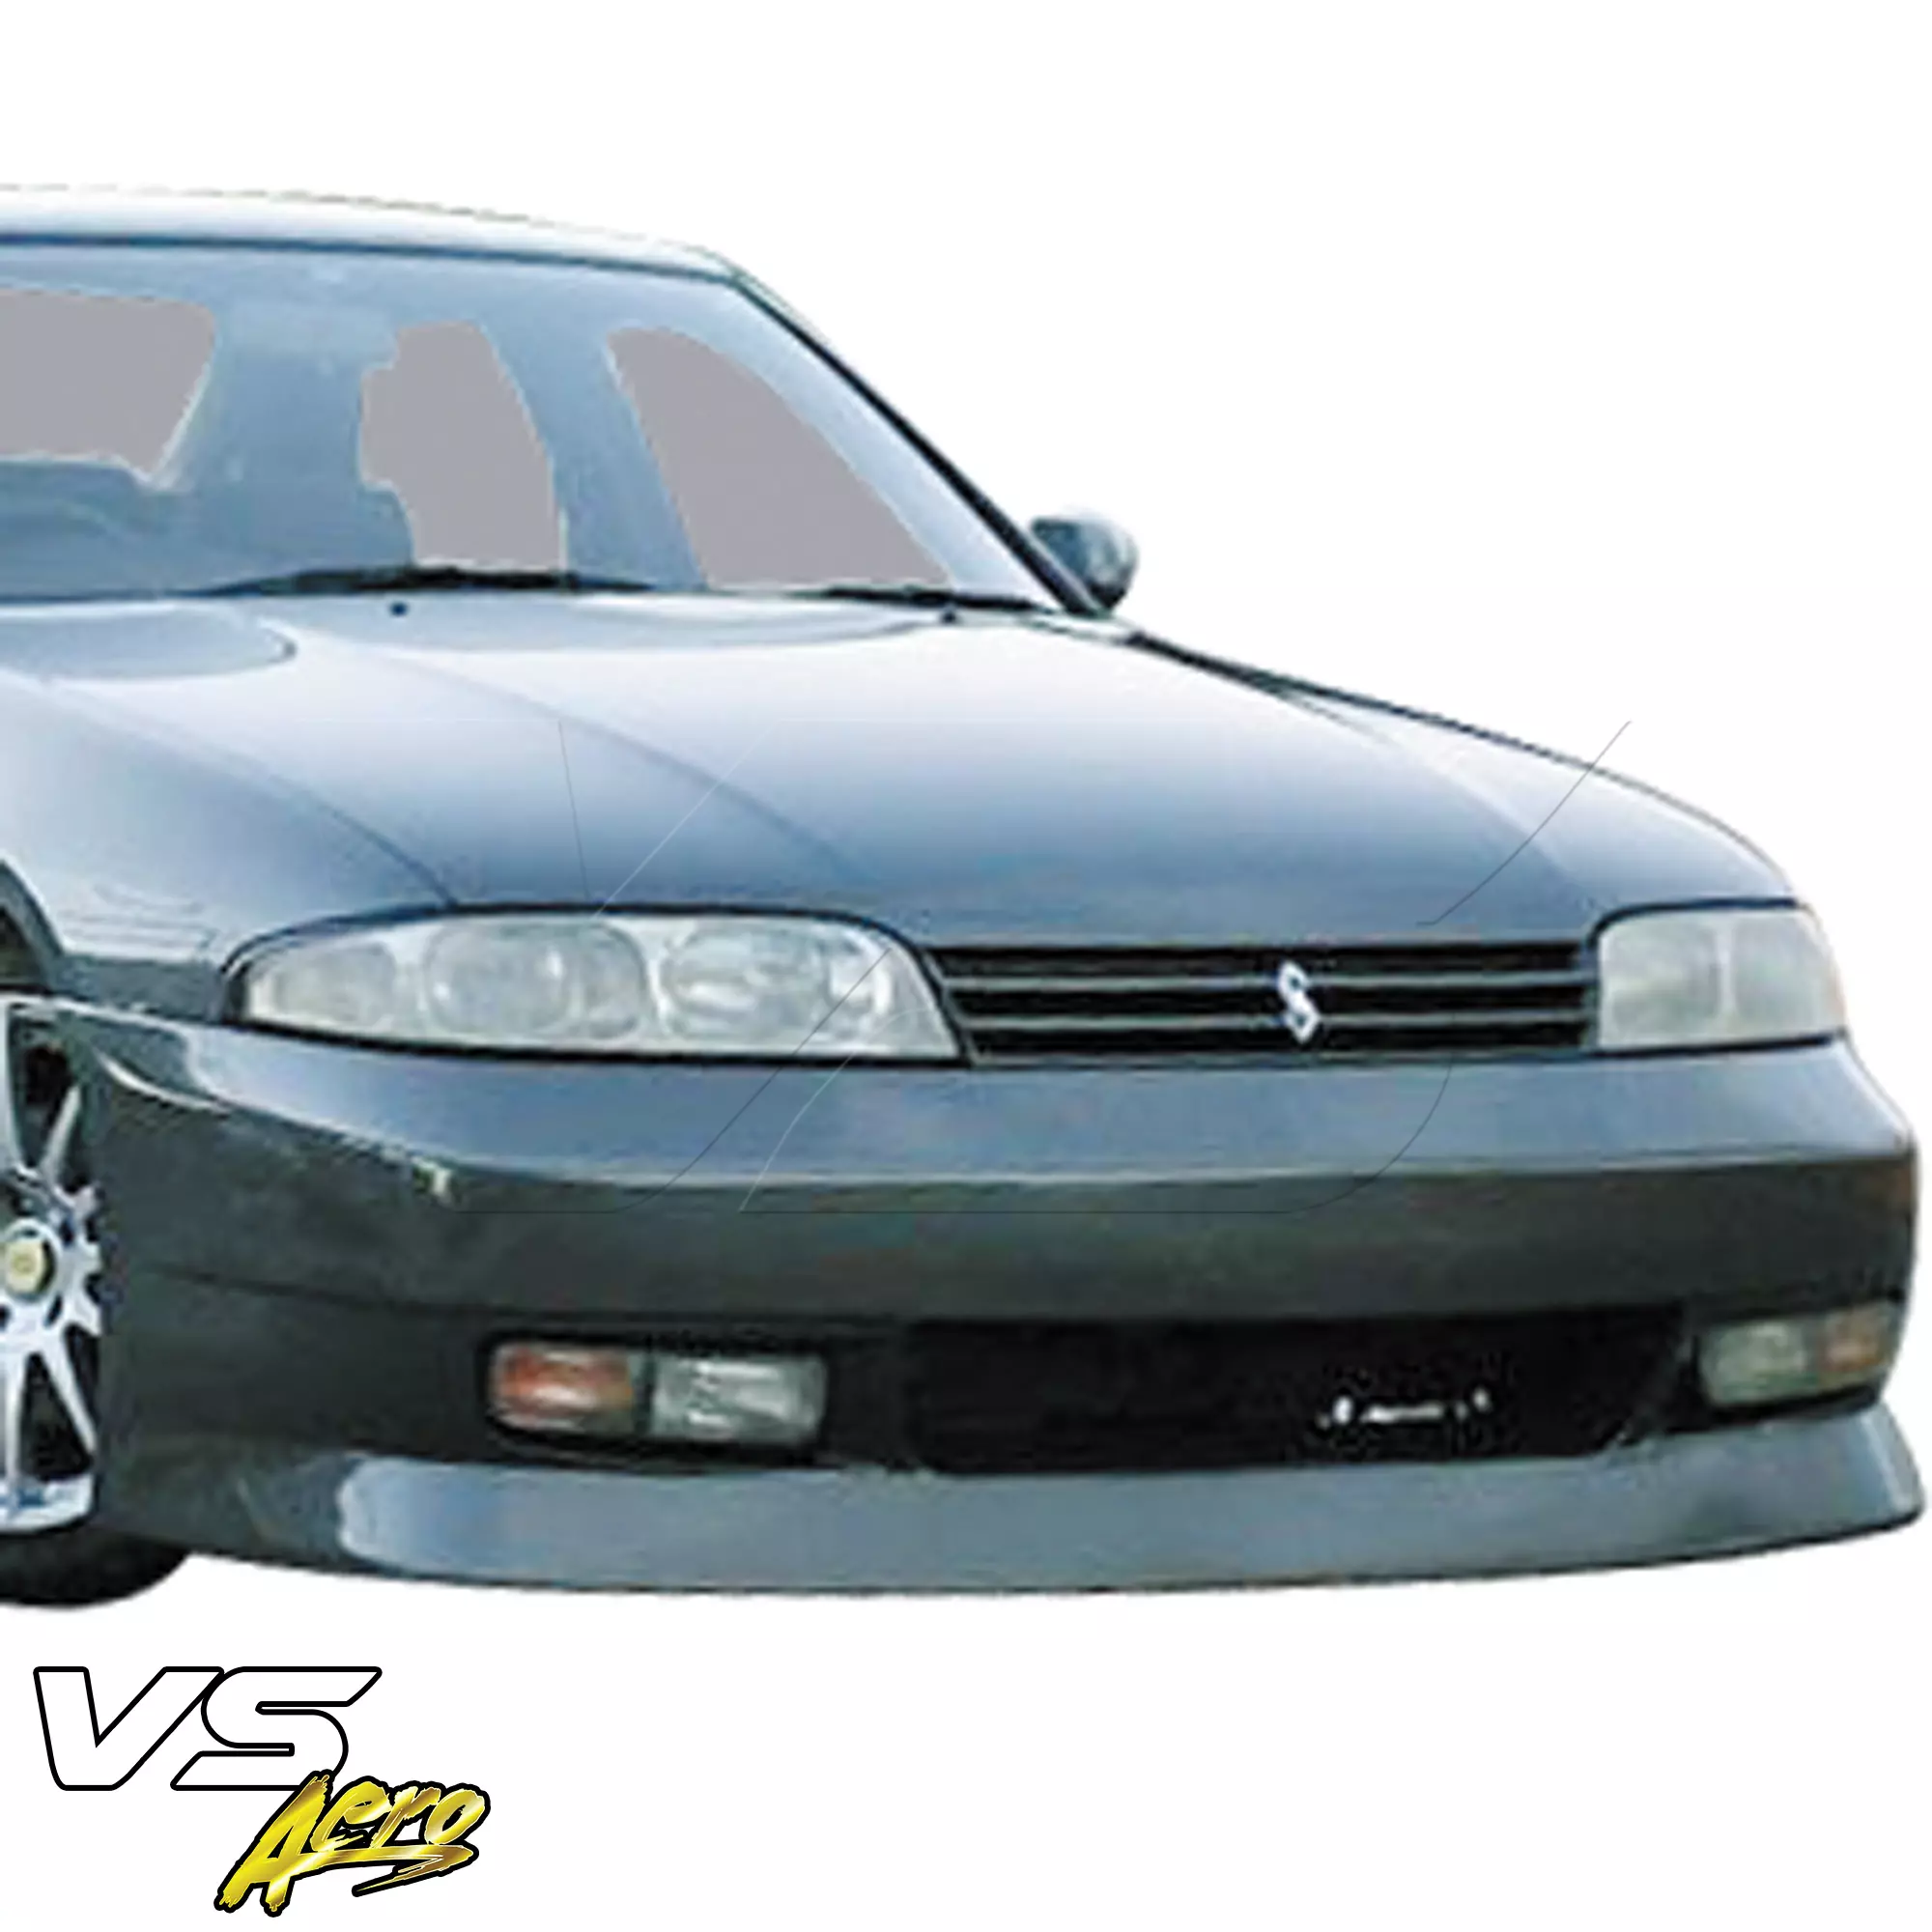 VSaero FRP FKON Body Kit 4pc > Nissan Skyline R33 GTS 1995-1998 > 2dr Coupe - Image 16